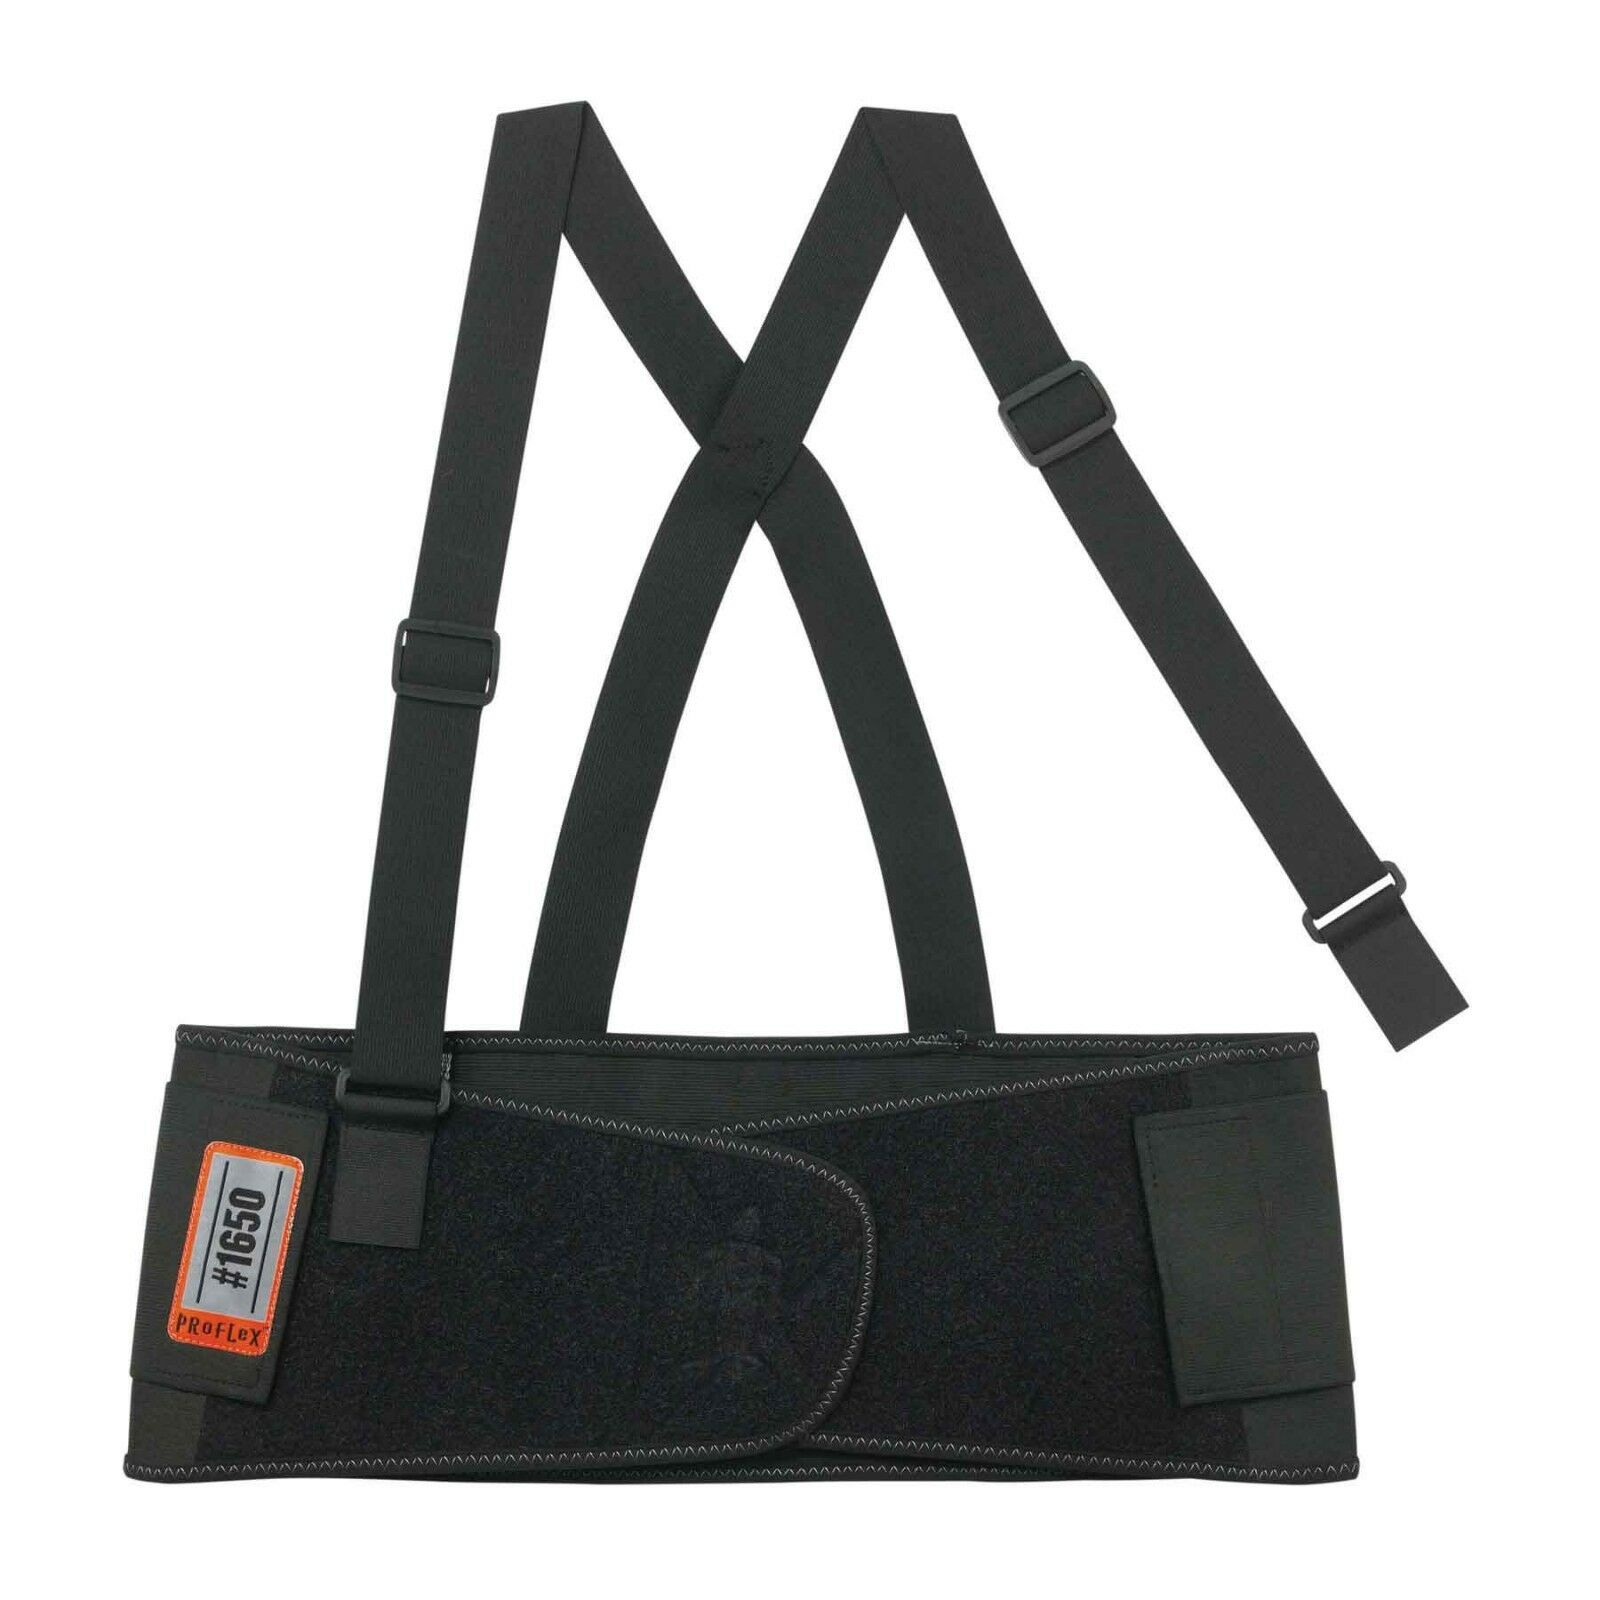 Ergodyne Proflex 1650 Economy Elastic Back Support Belt, Black